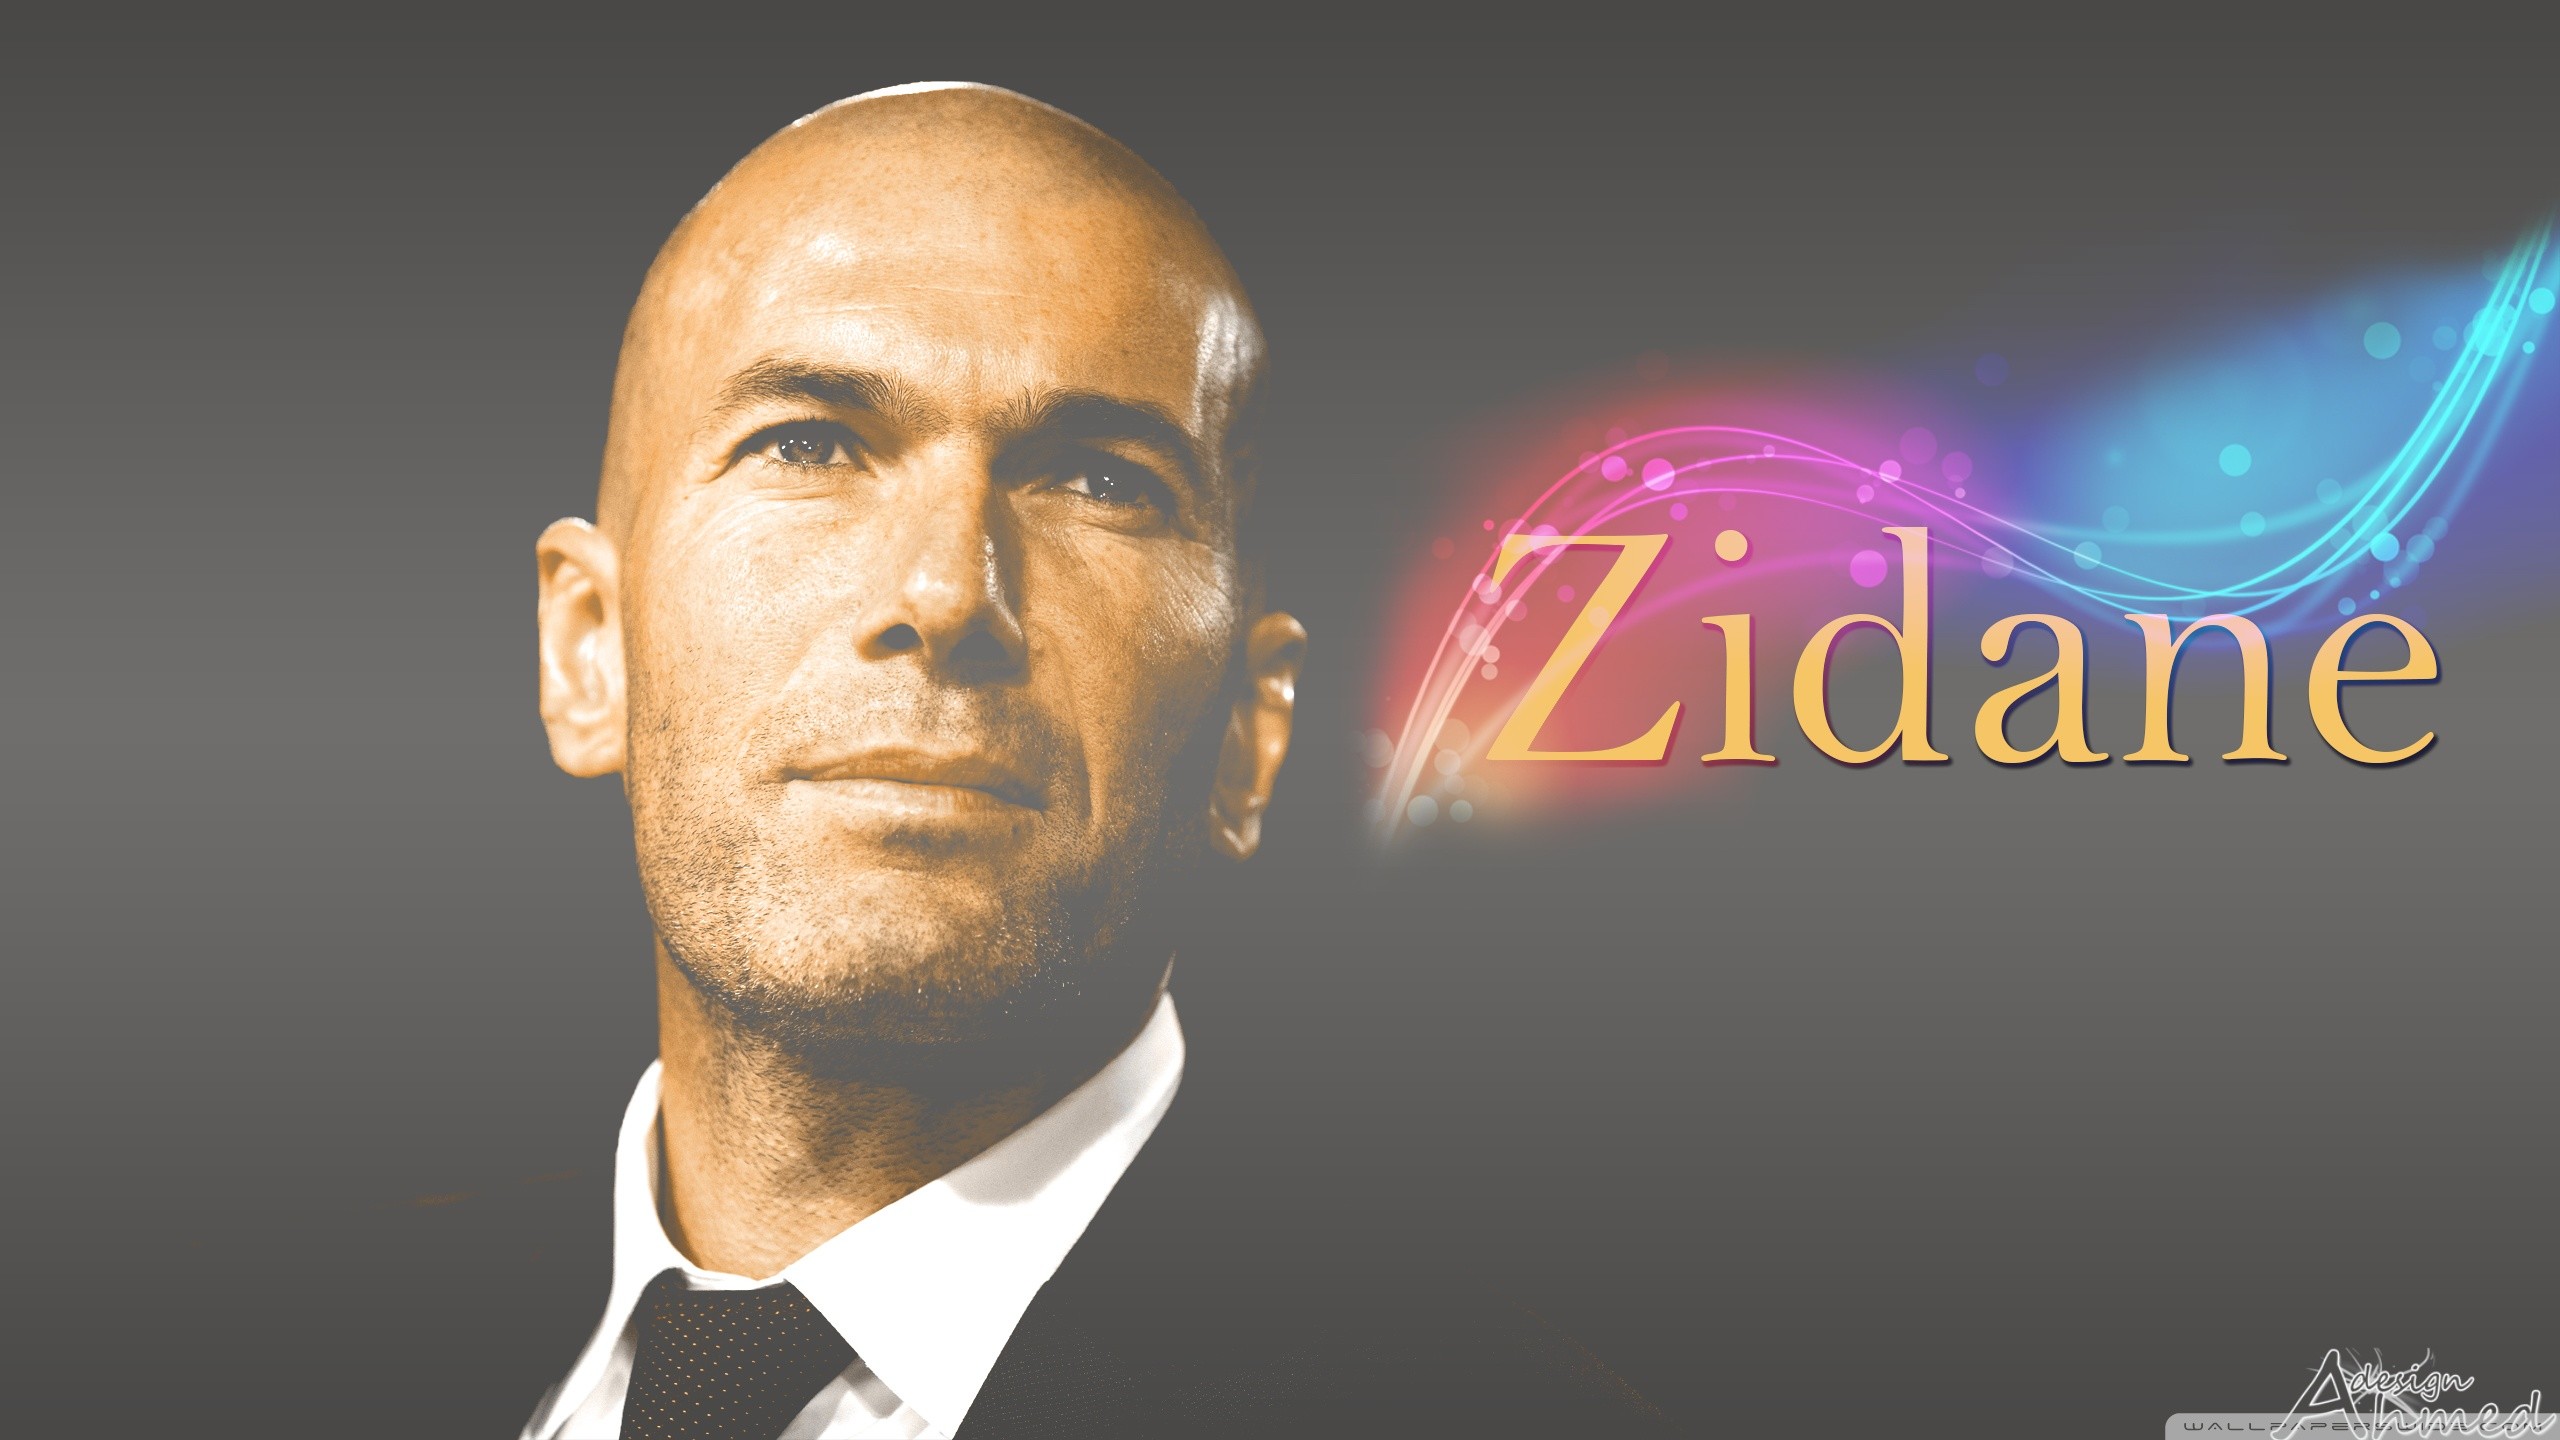 Zidane Wallpapers.